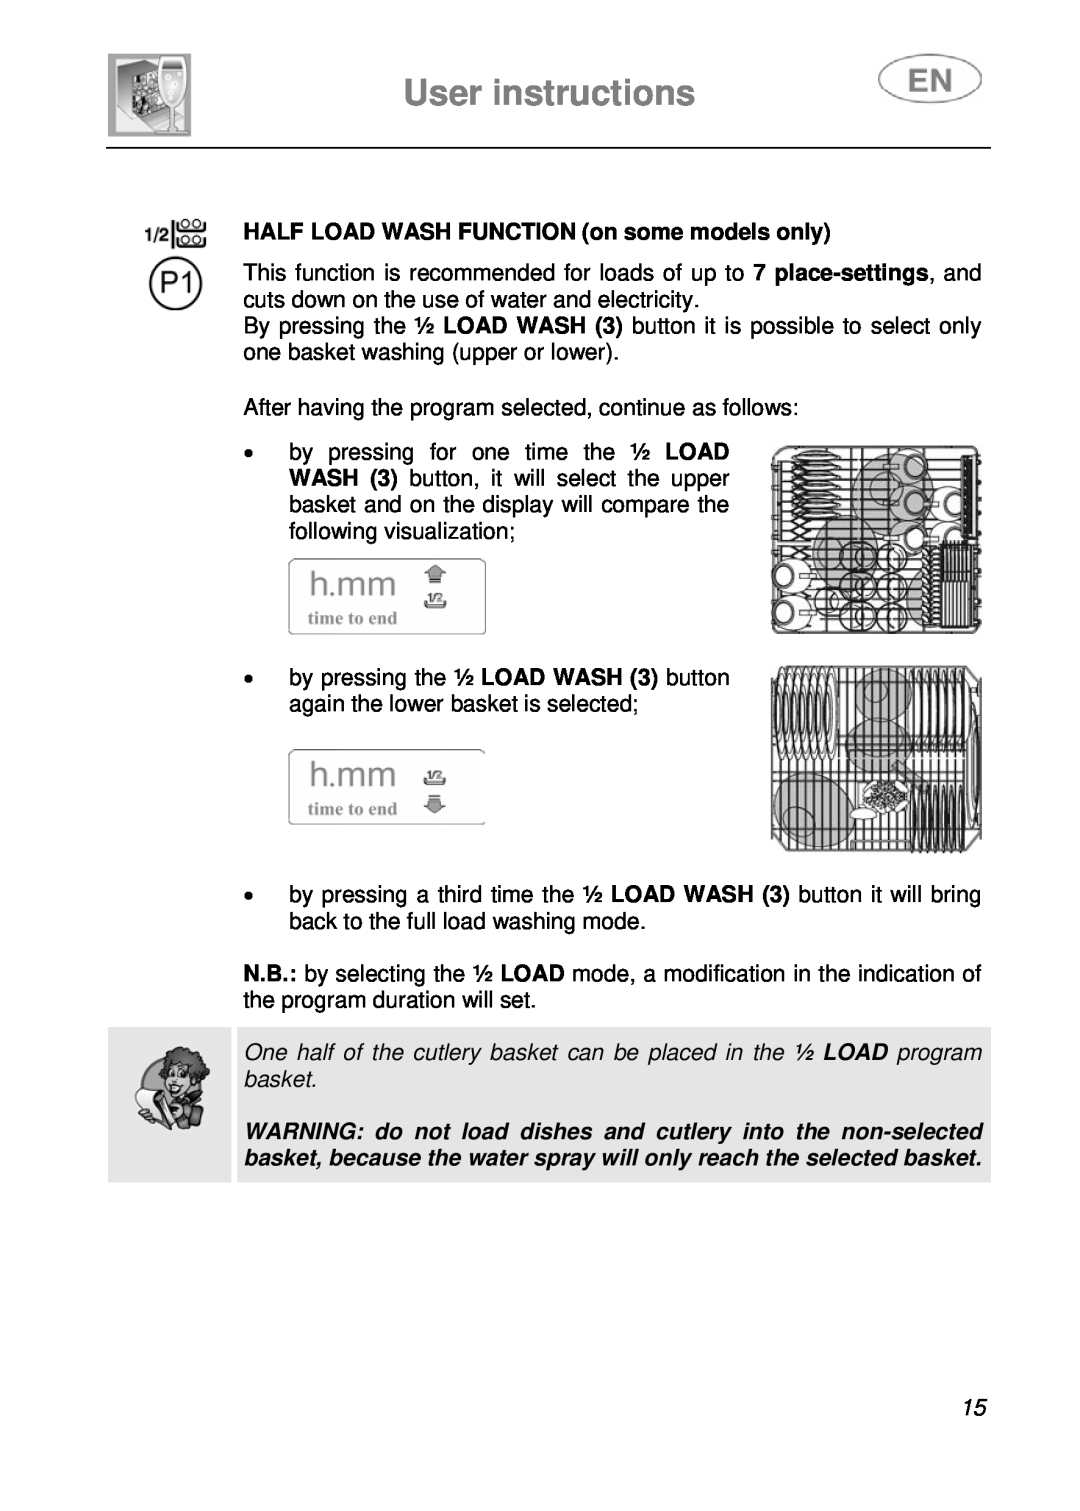 Smeg LVS1449B instruction manual User instructions, HALF LOAD WASH FUNCTION on some models only 